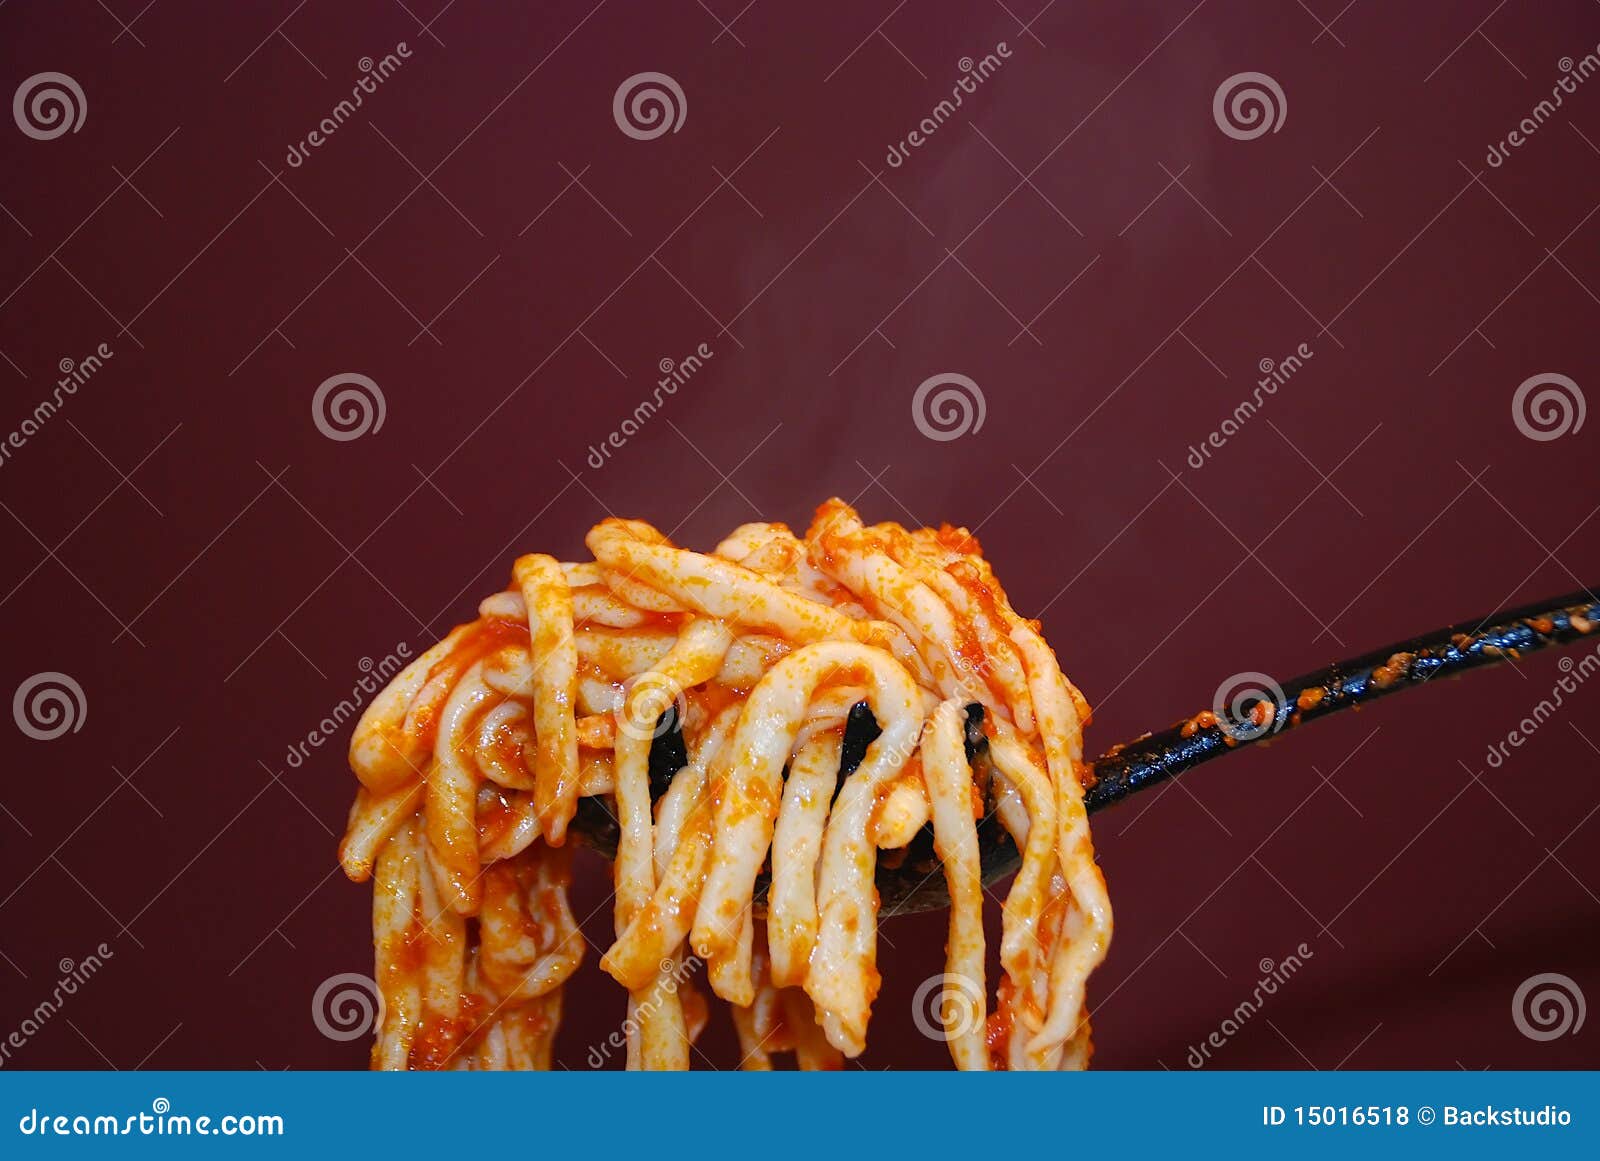 macaroni al ferro